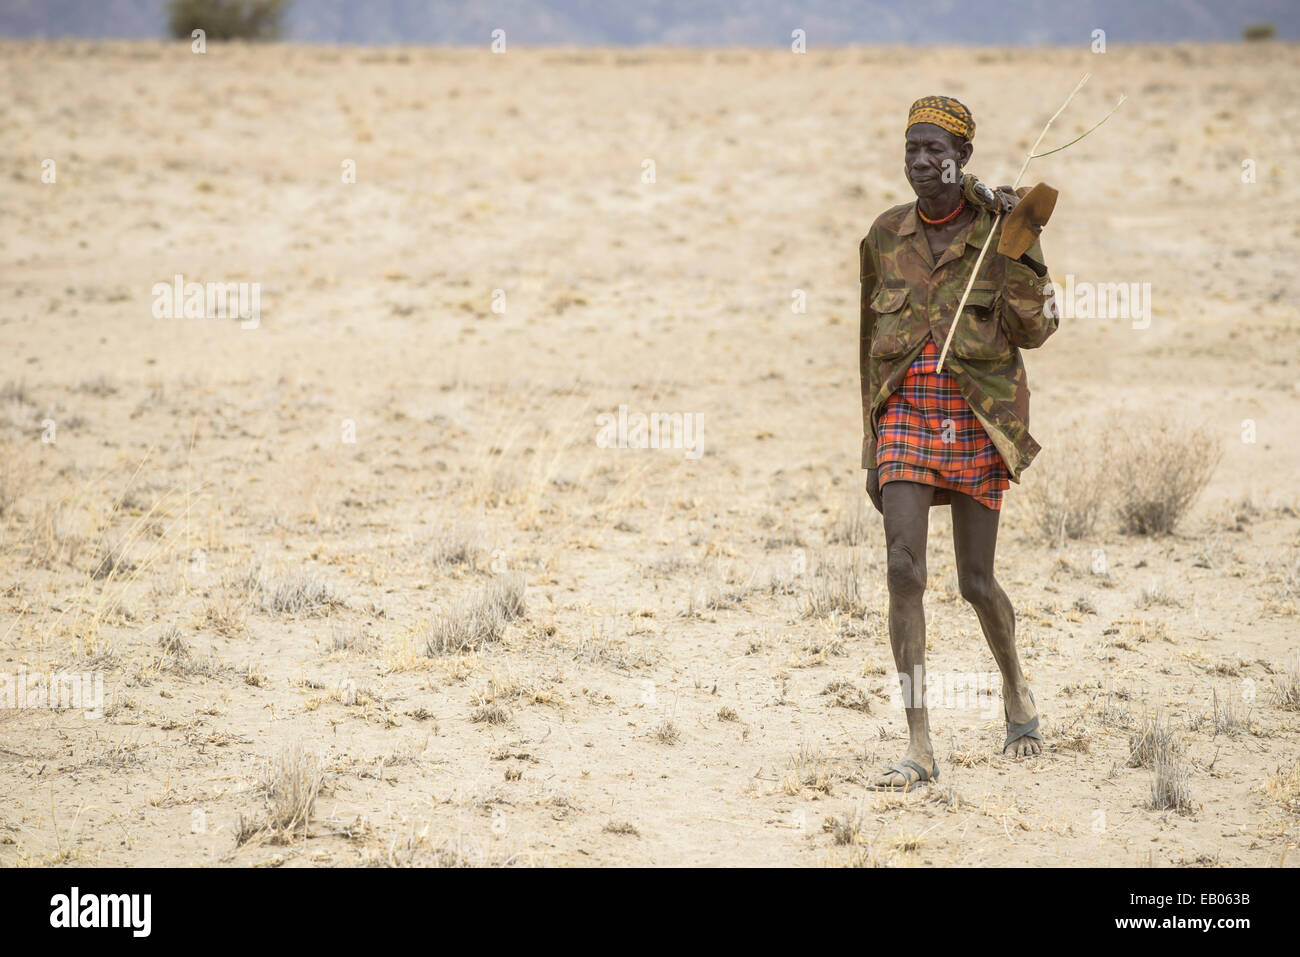 Turkana warrior in the desert, Kenya Stock Photo